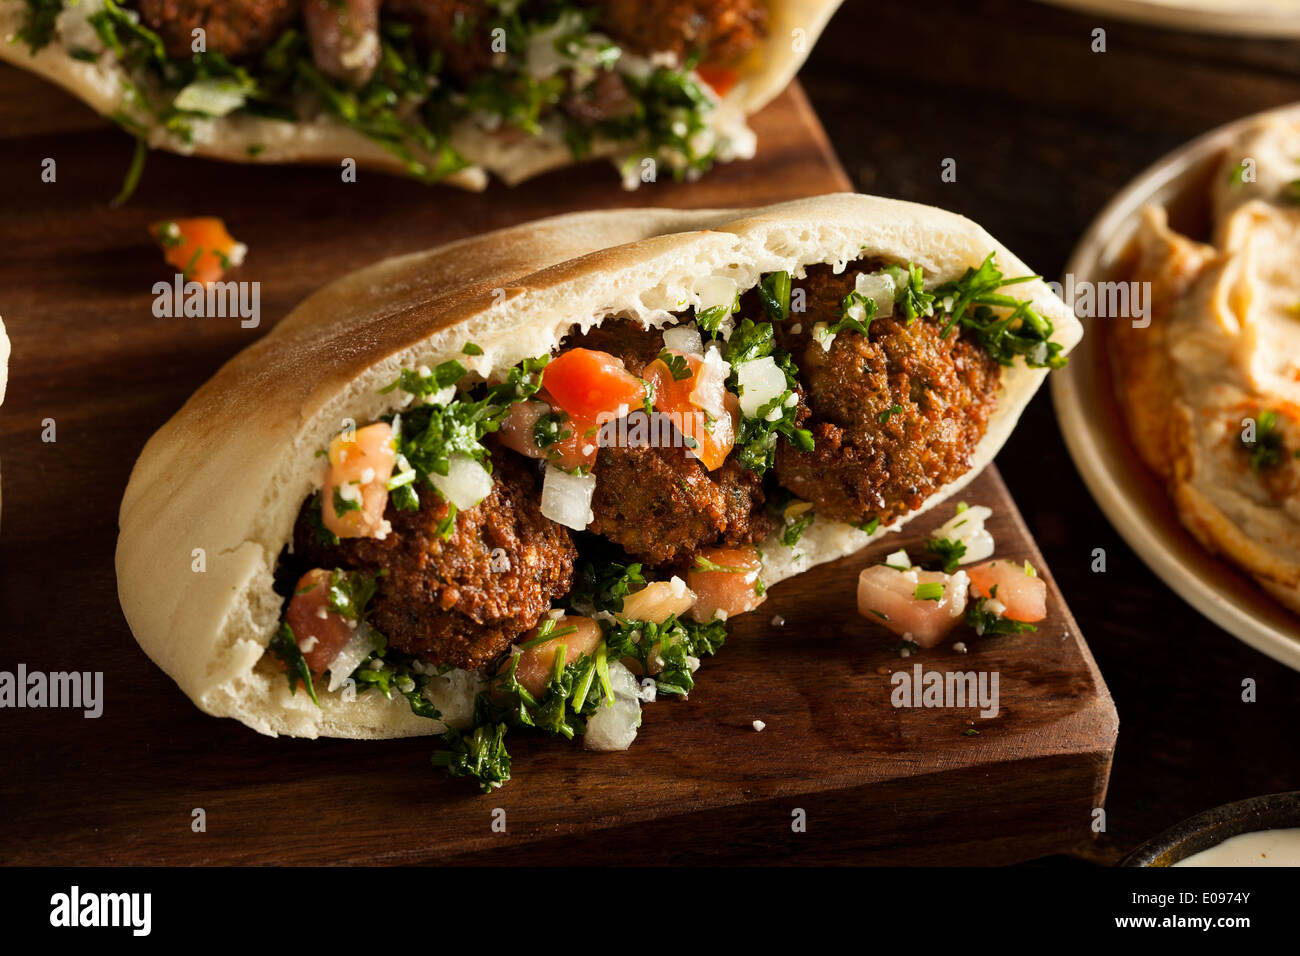 Healthy Vegetarian Falafel Pita with Rice and Salad Stock Photo